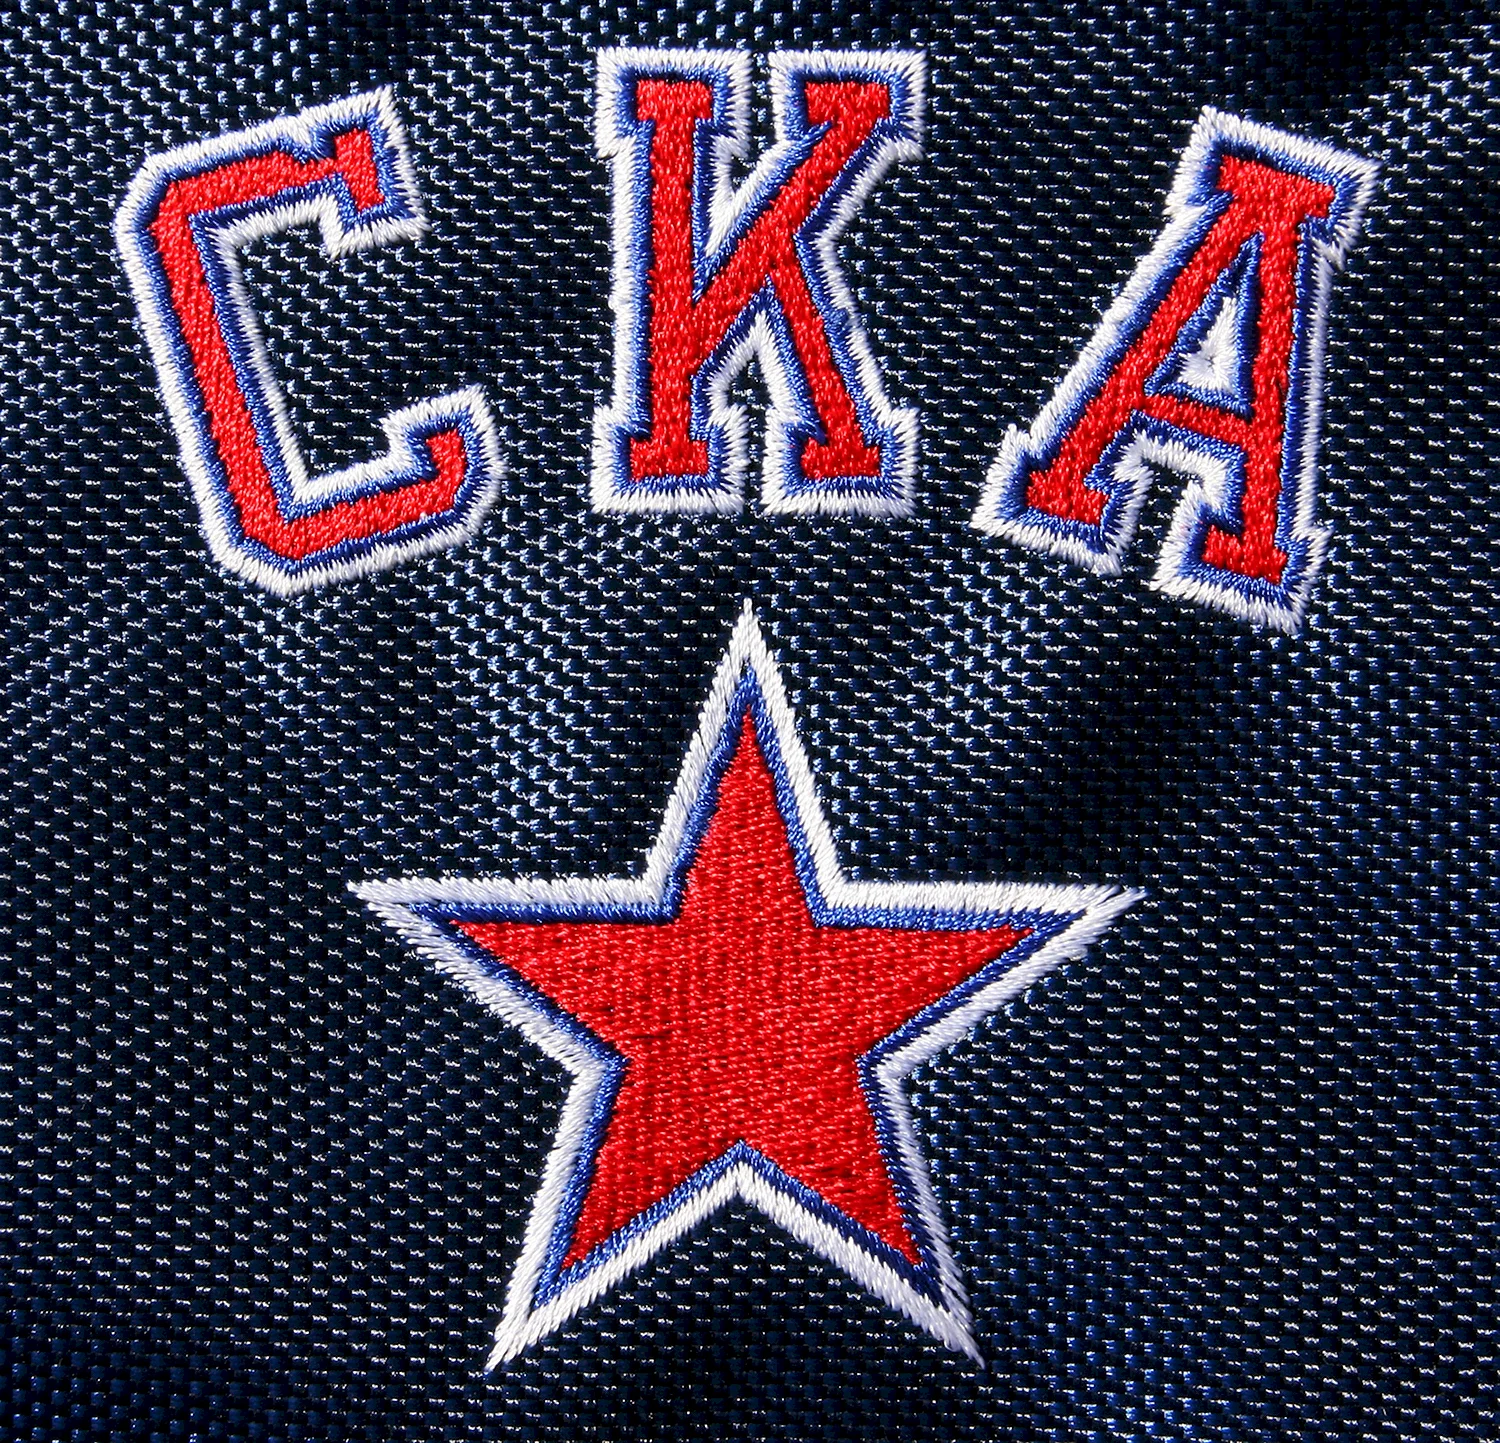 Логотип хк СКА Санкт-Петербург